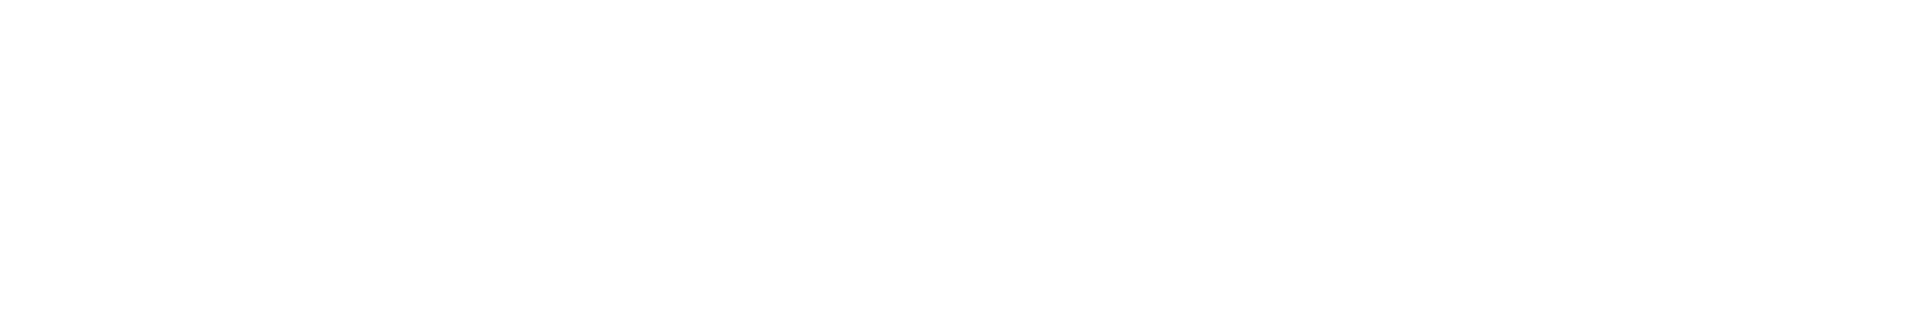 深圳宇行科技-STD banner 3